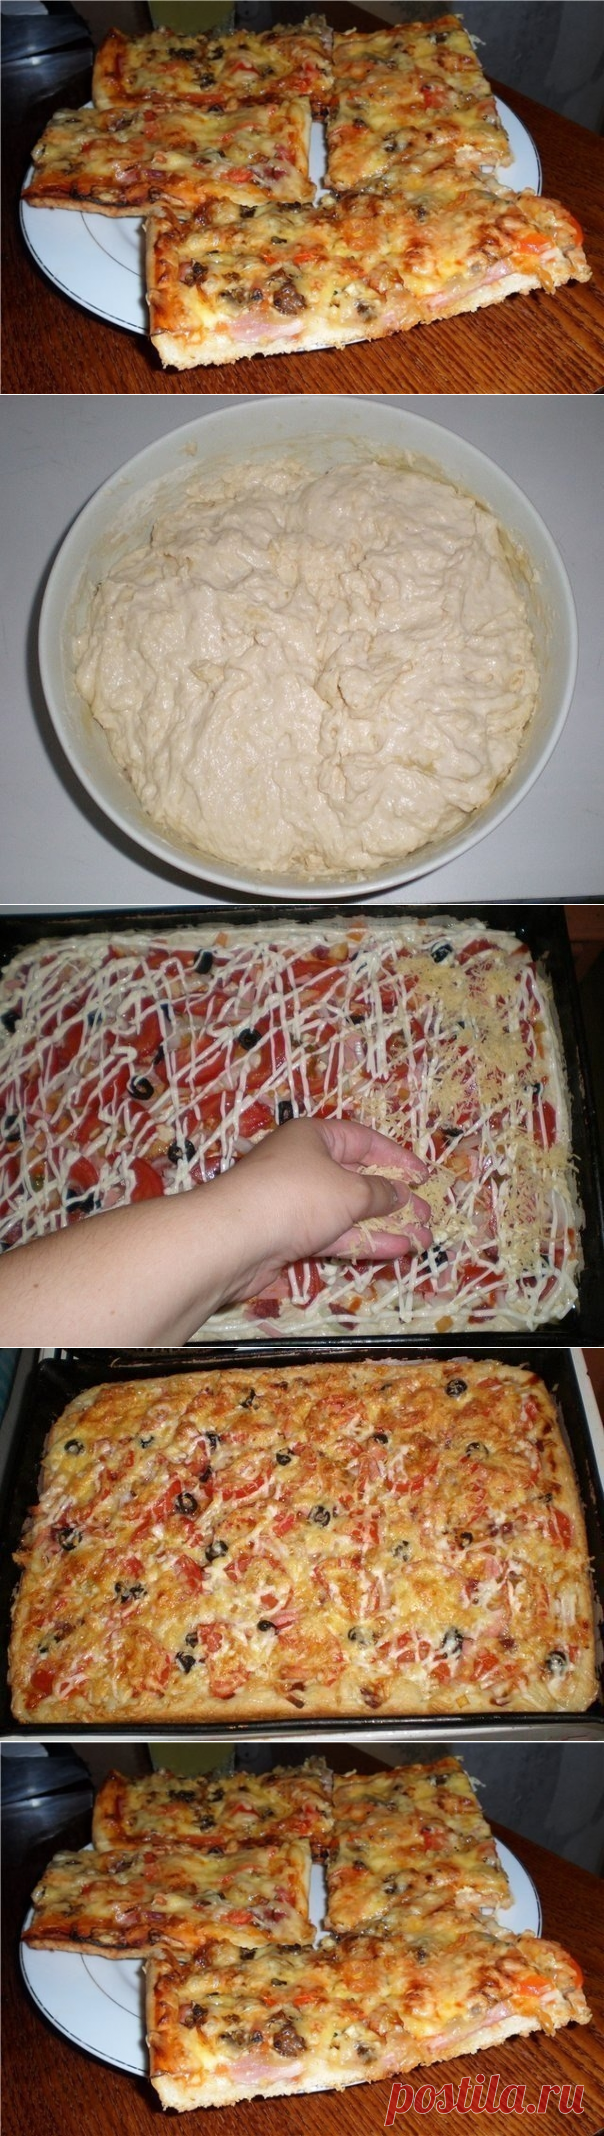 как приготовить пиццу в домашних условиях ютуб фото 81